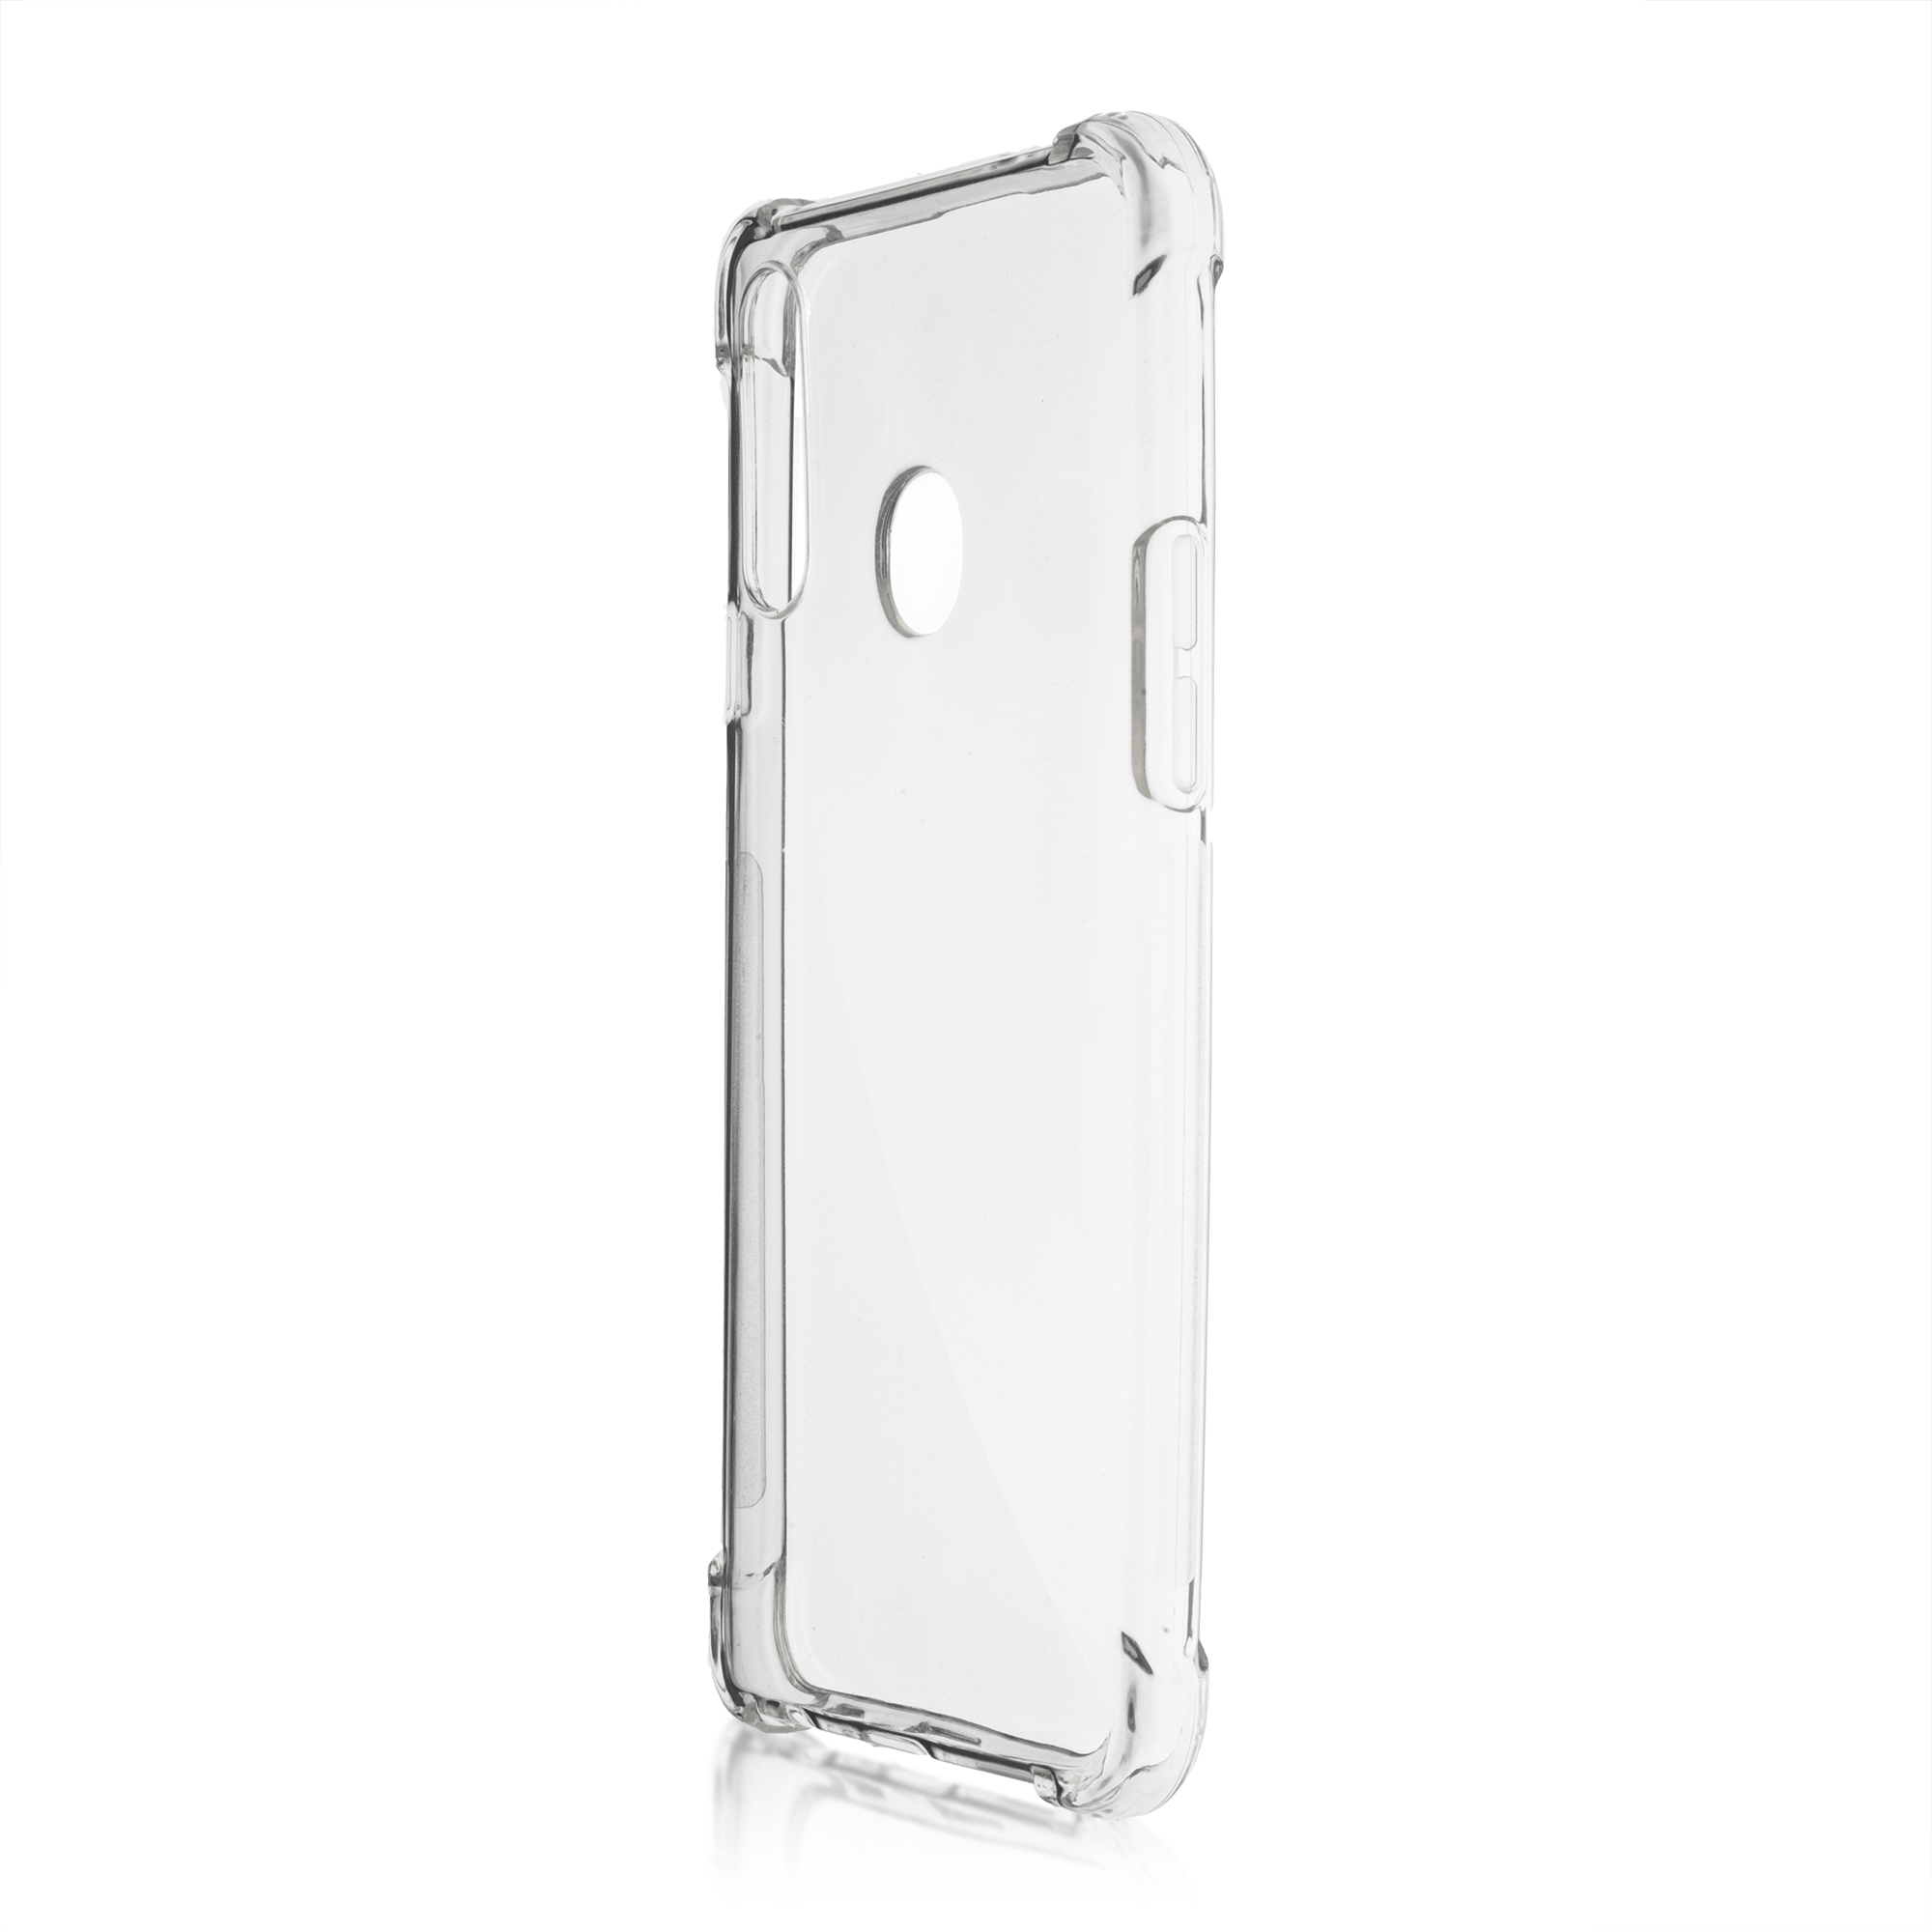 Чехол-накладка BROSCO Hard для смартфона Samsung Galaxy A20s, силикон, прозрачный (SS-A20S-HARD-TRANSPARENT)